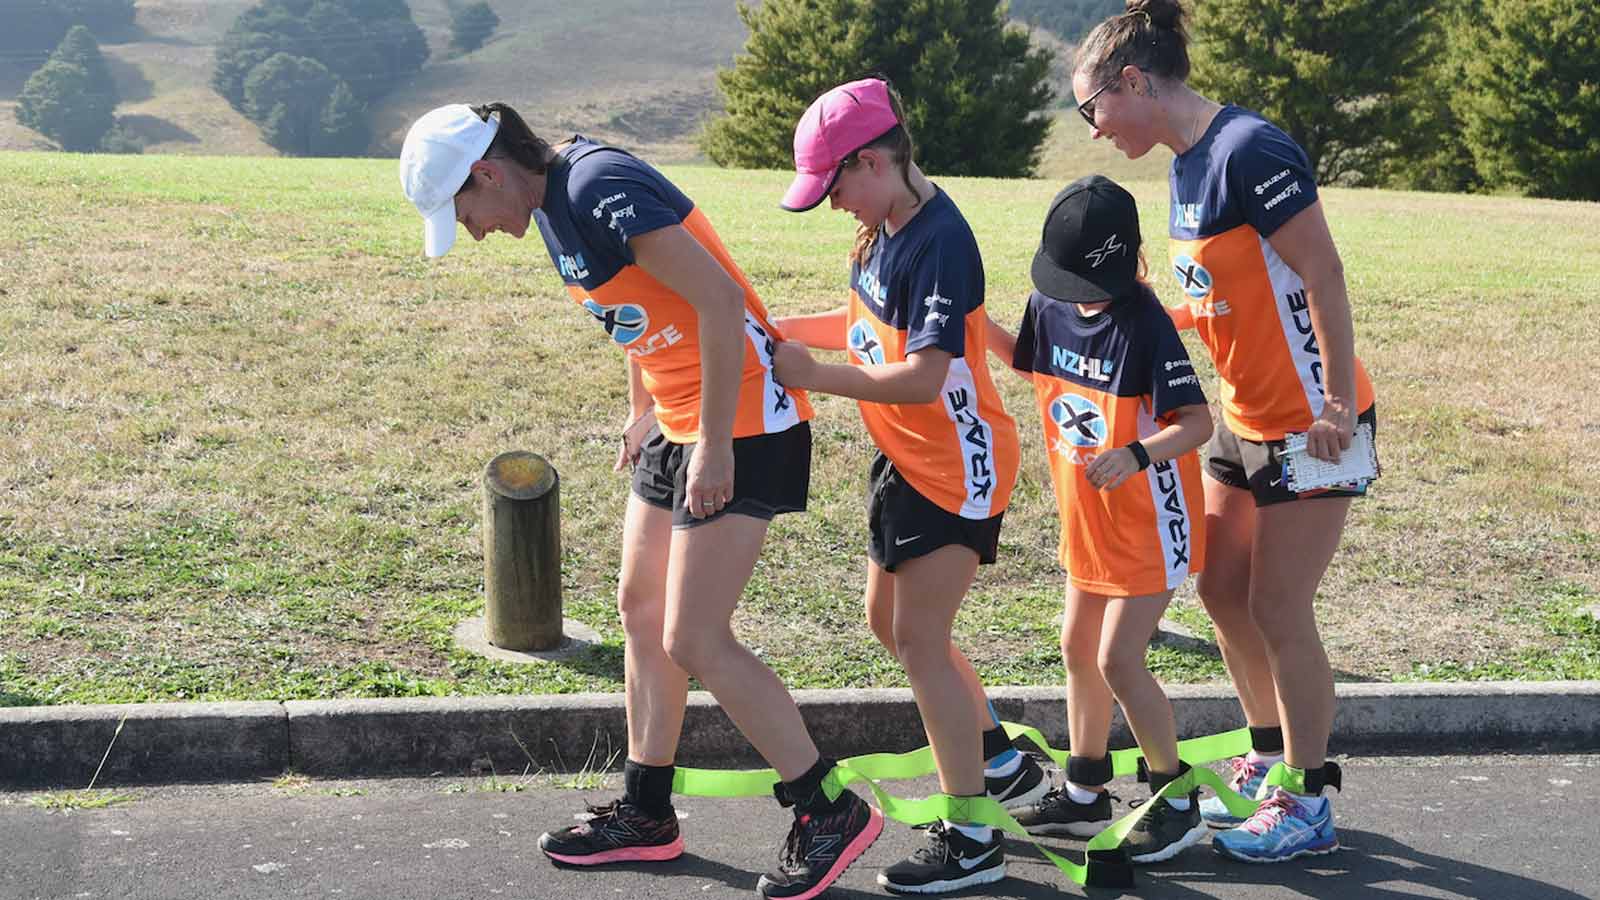 Teamwork in NZHL X Race